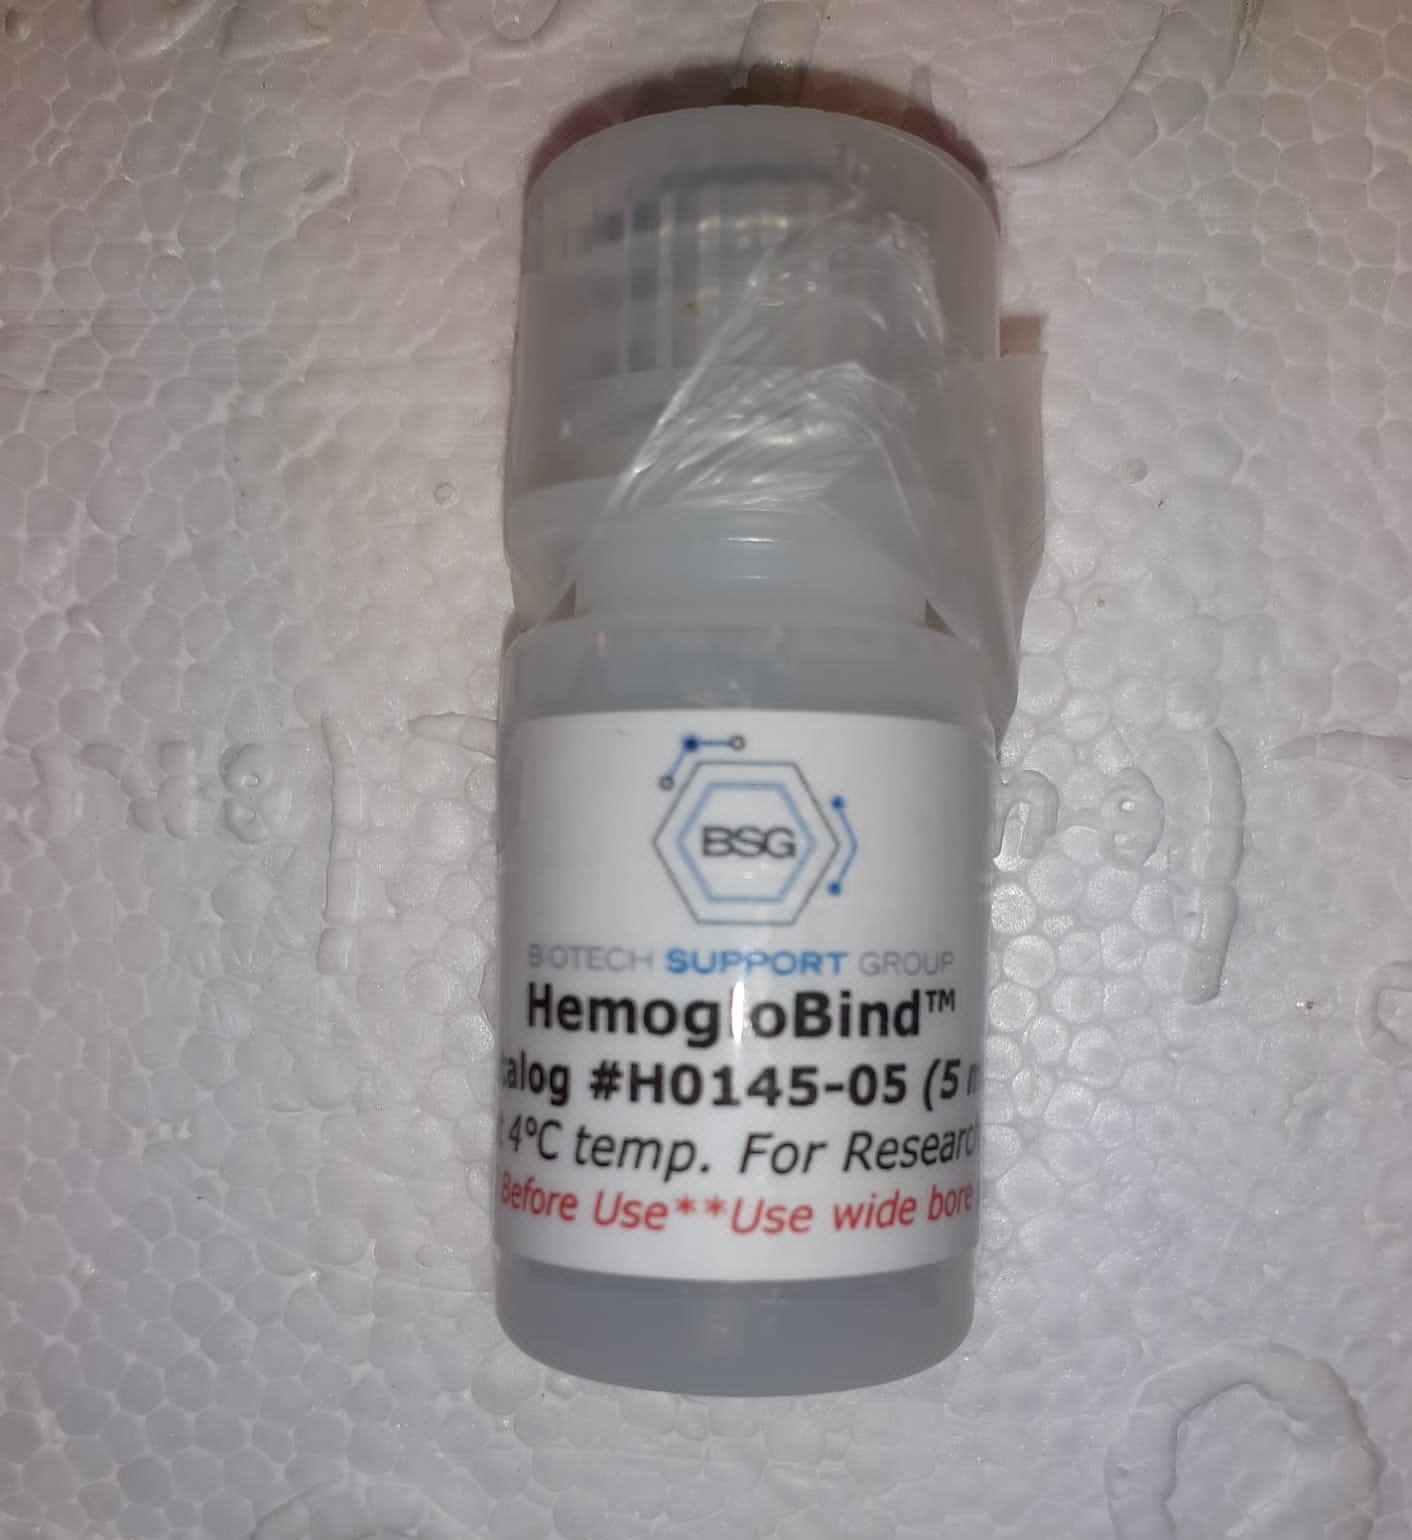 hemoglobin bsg